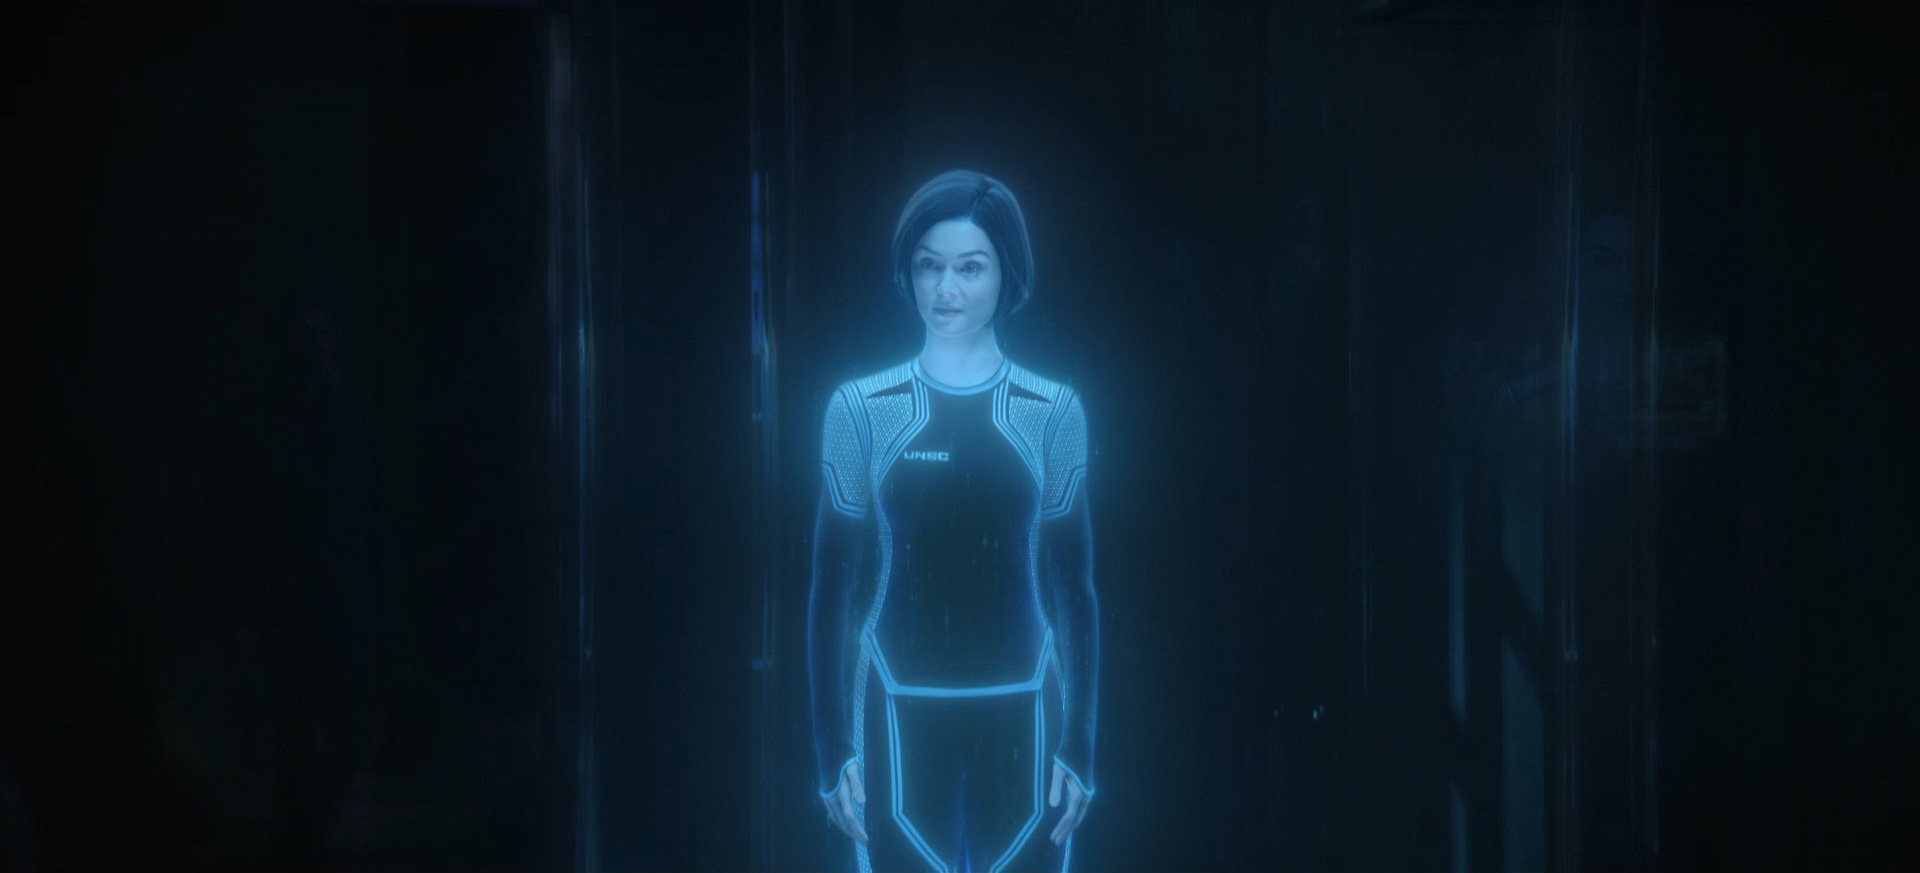 Halo tv series: Cortana by fireboyma on DeviantArt